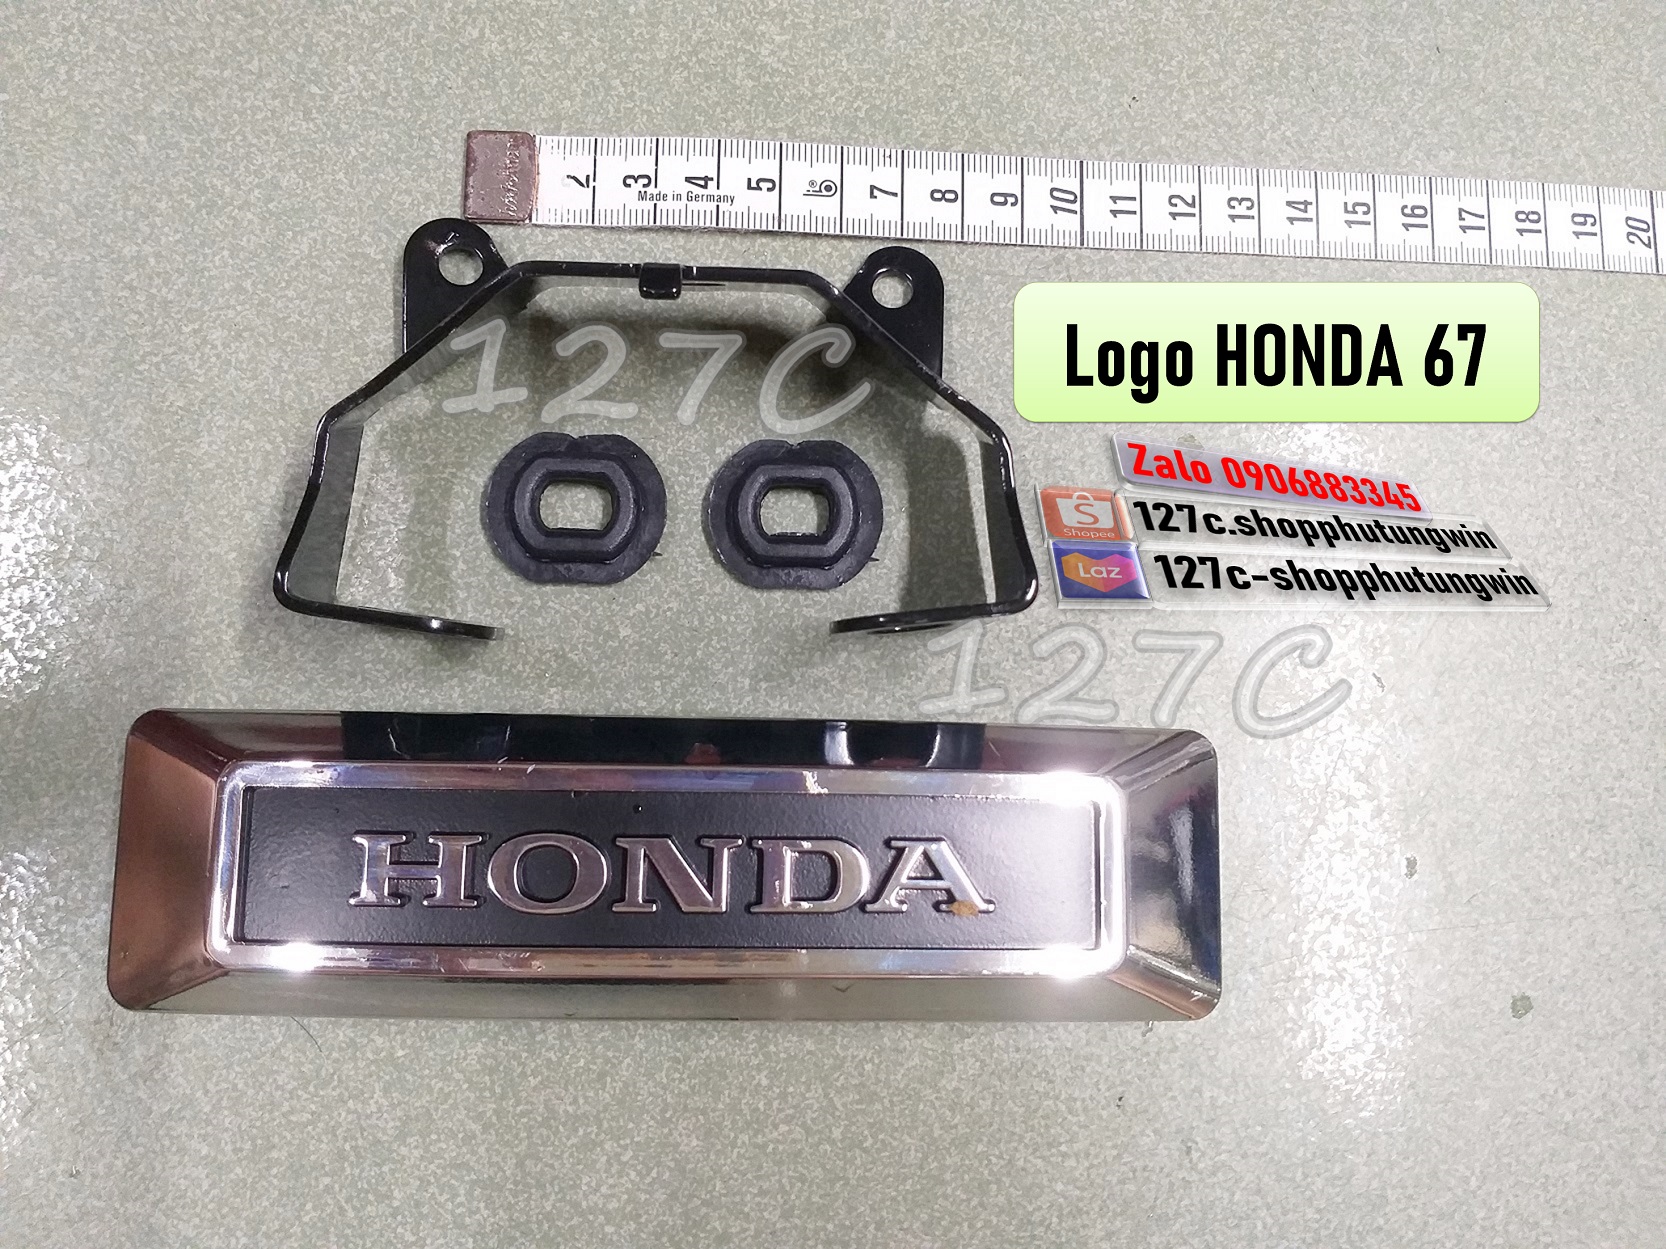 Lịch sử lịch sử một thời Honda 67